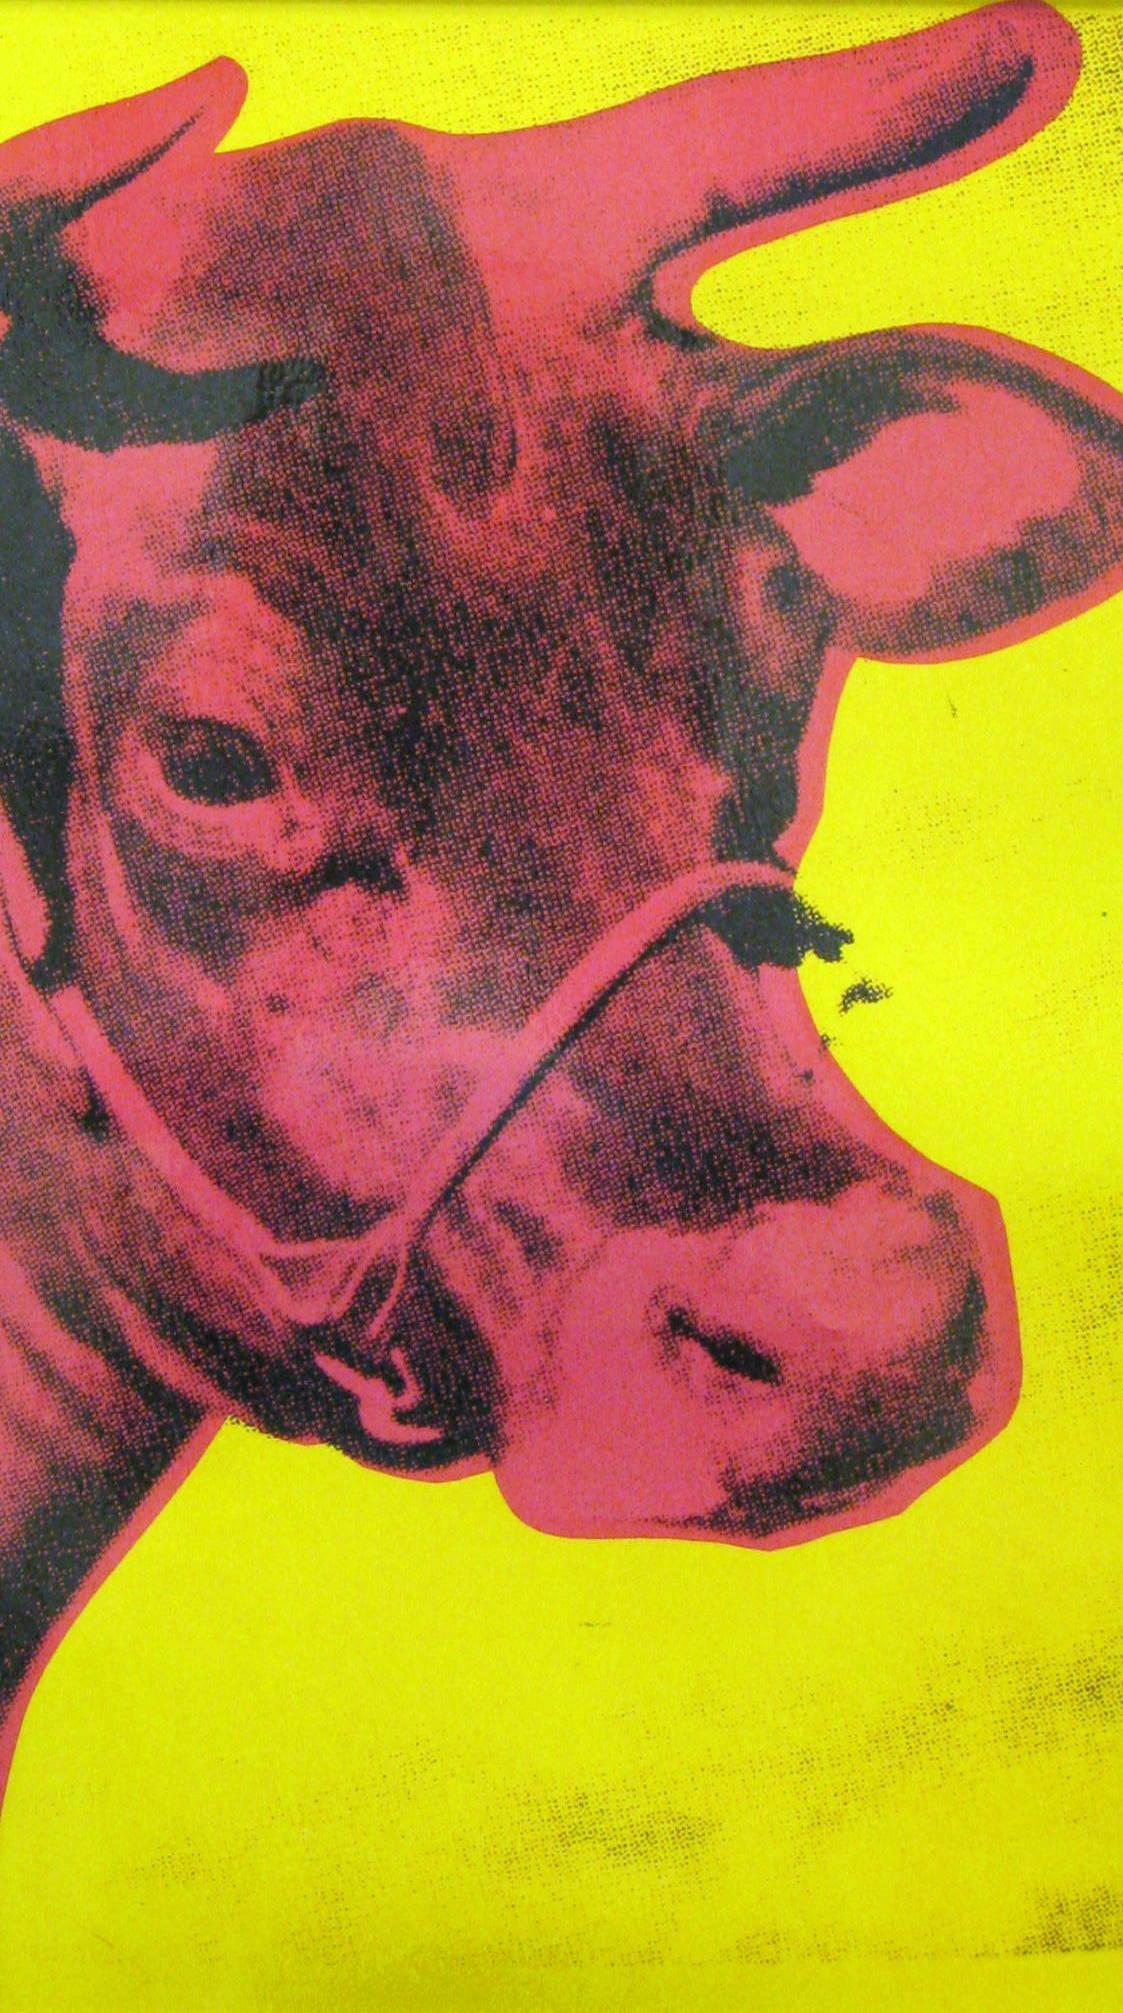 پس زمینه cow 1966 چاپ هنری زرد و صورتی توسط اندی وارهول هنر پاپ آرت آفریقایی